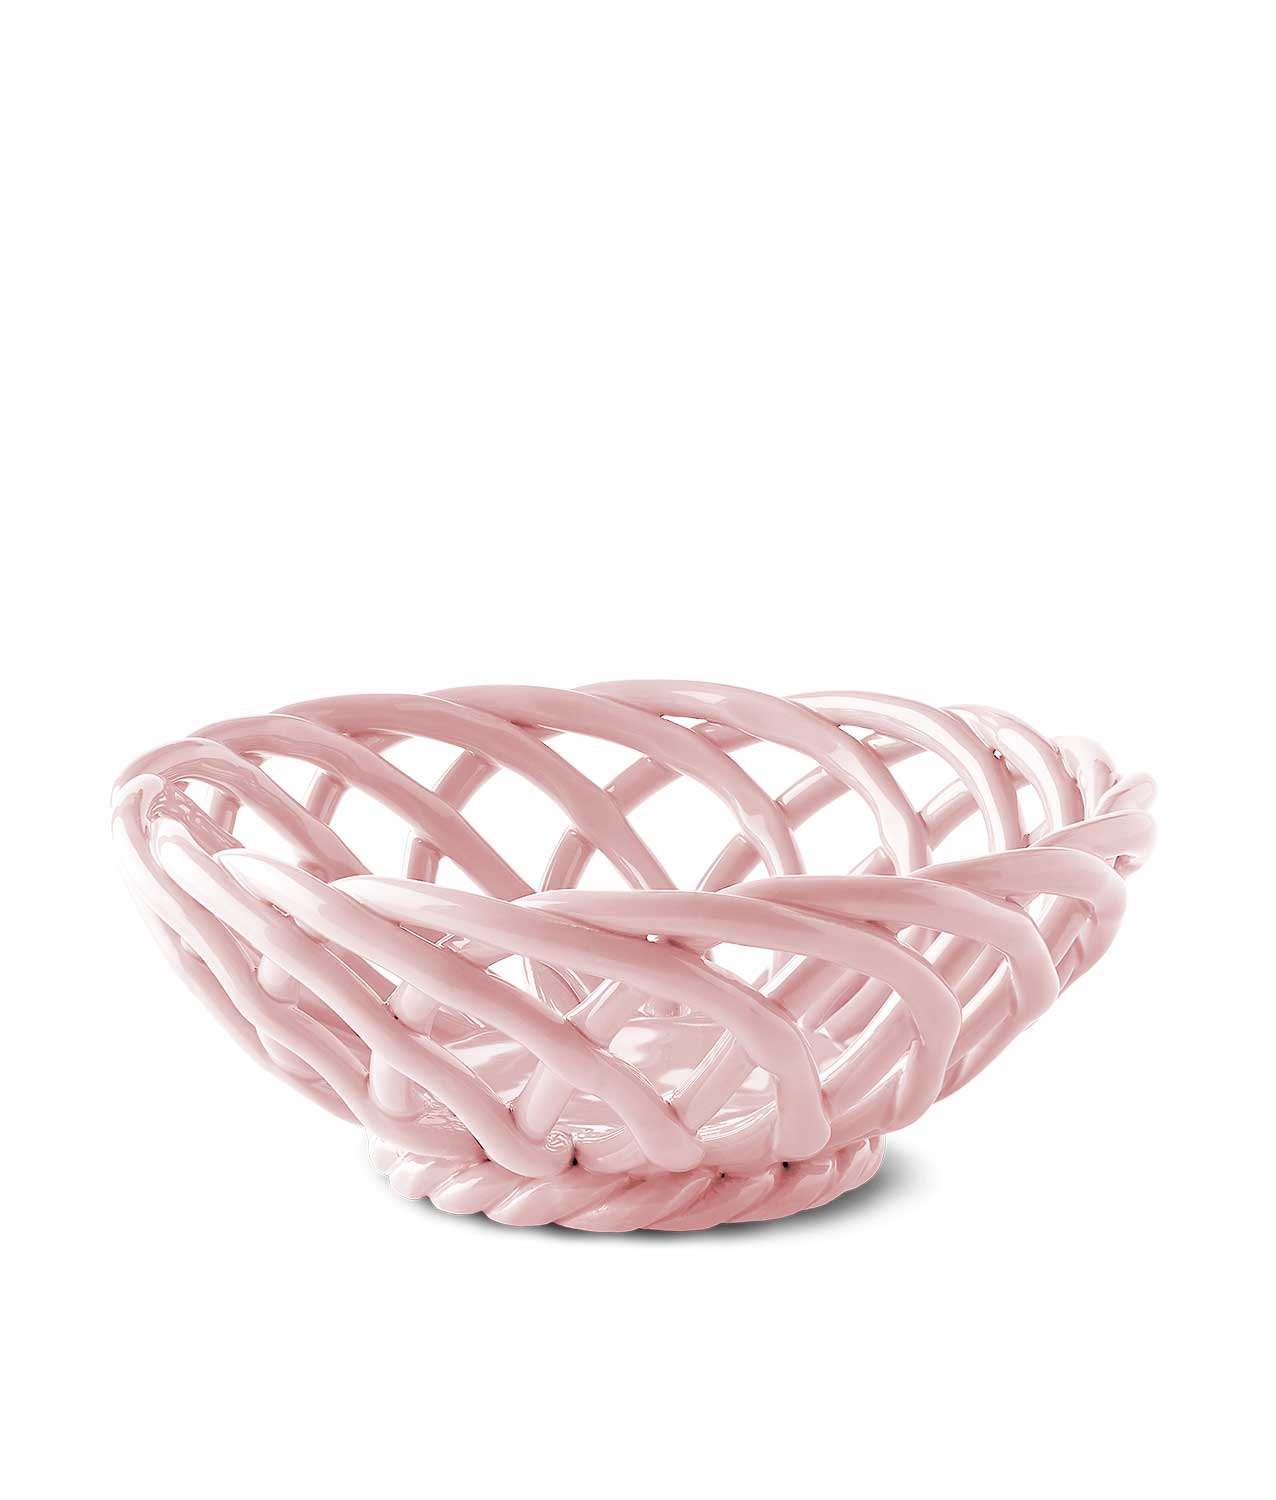 Octaevo Sicilia Small Basket Ceramic - Pink